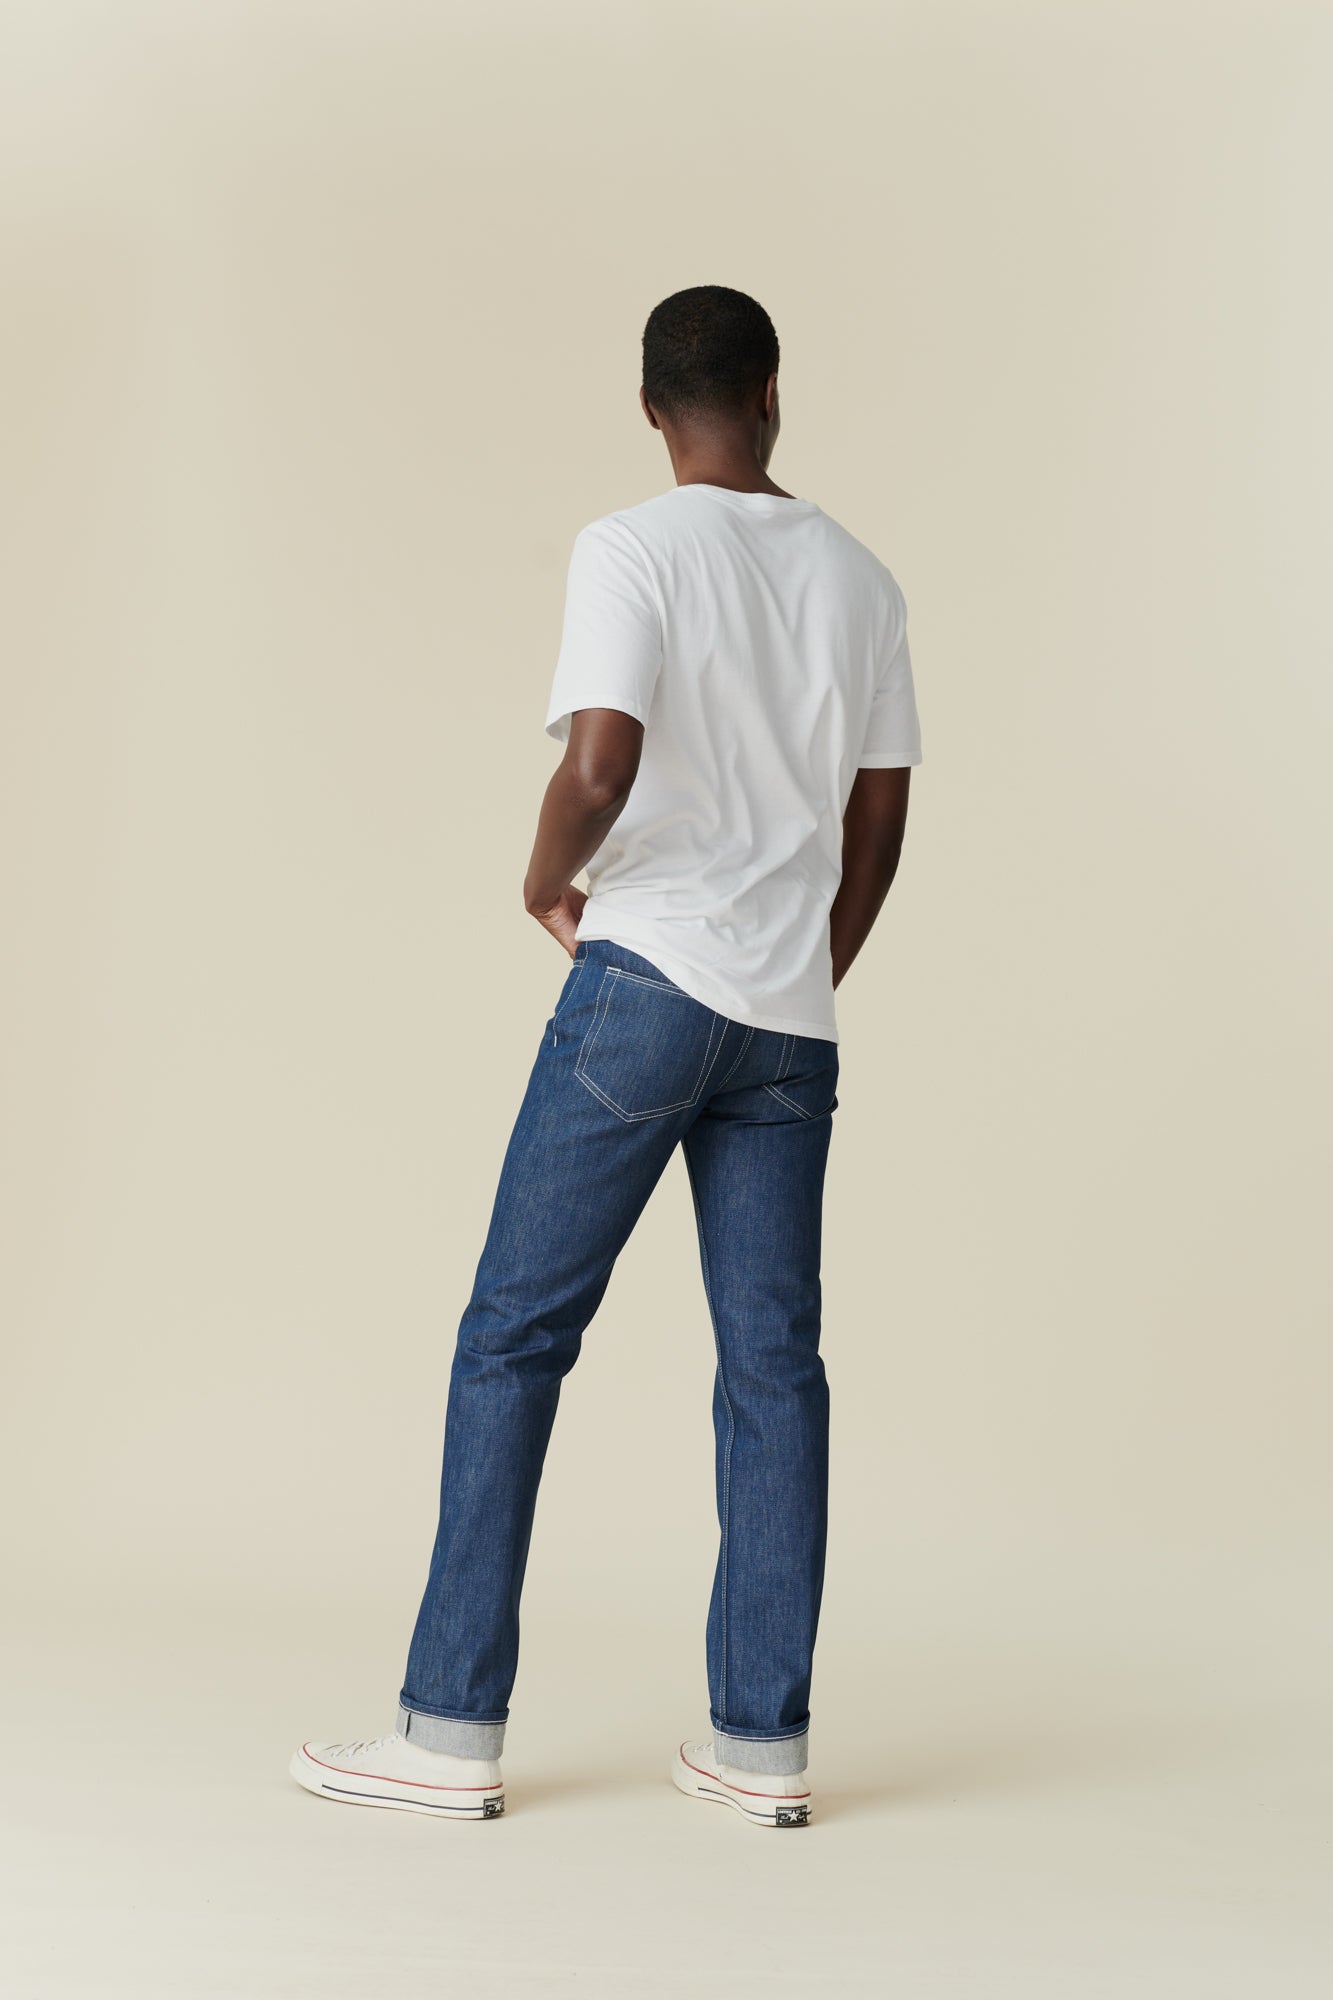 Full body back image of black male wearing straight cut jeans in blue, rolled hem. 